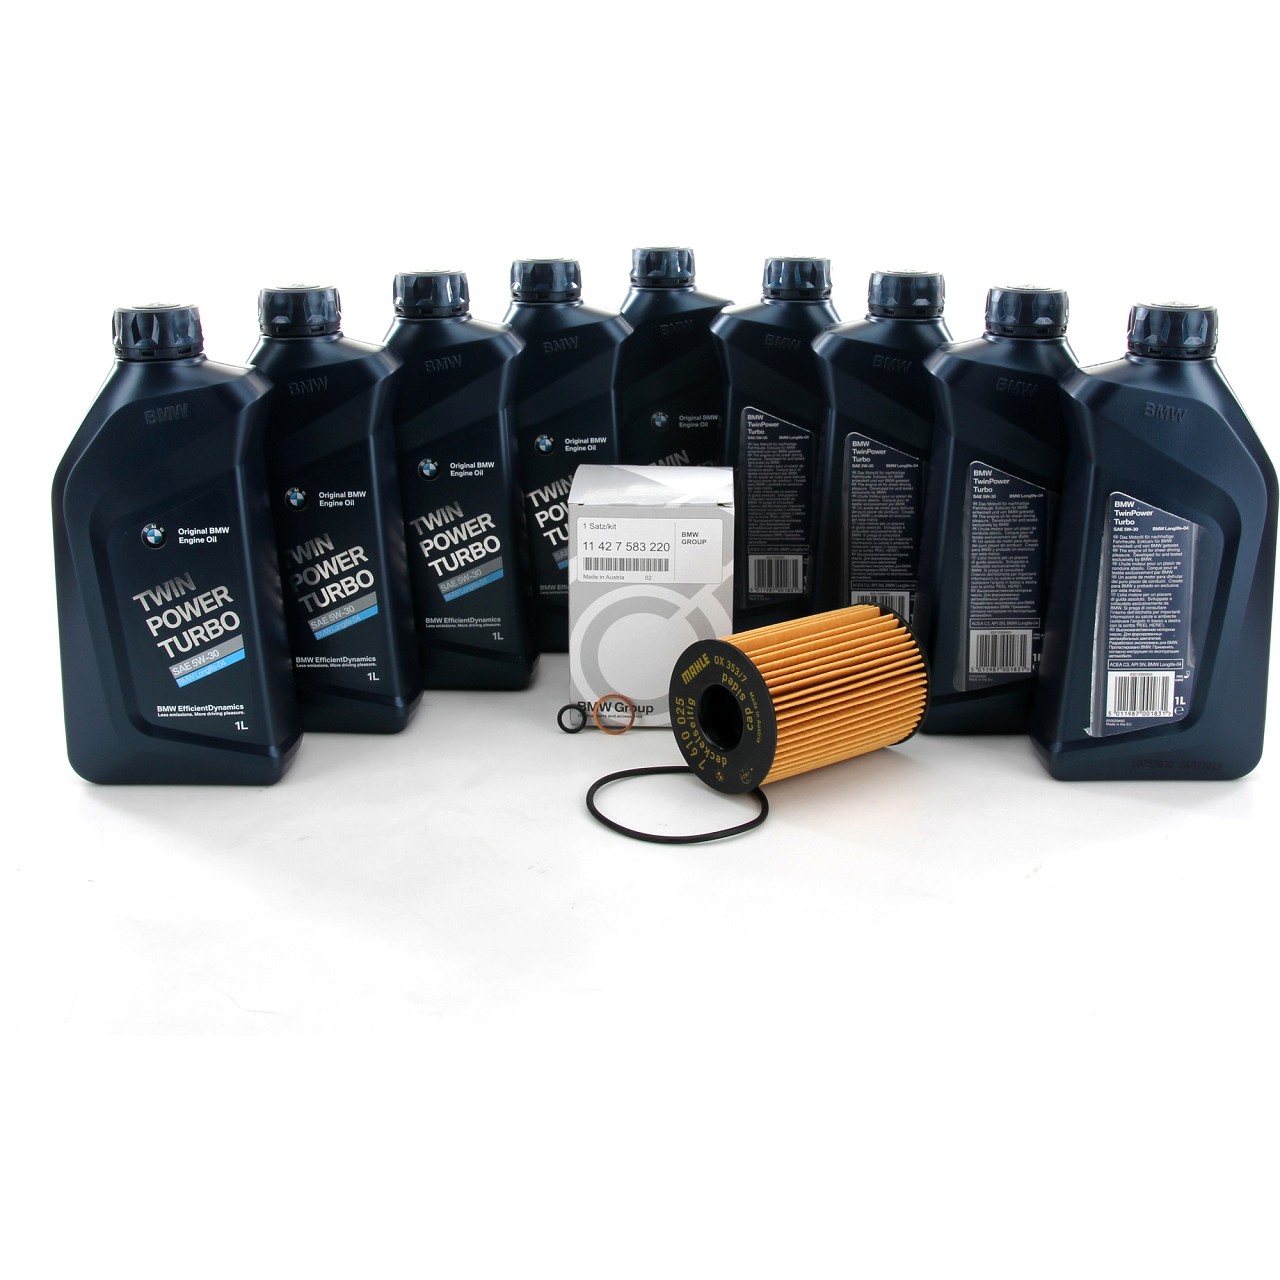 9L 9 Liter ORIGINAL BMW Motoröl Öl 5W30 LongLife-04 + Ölfilter 11427583220